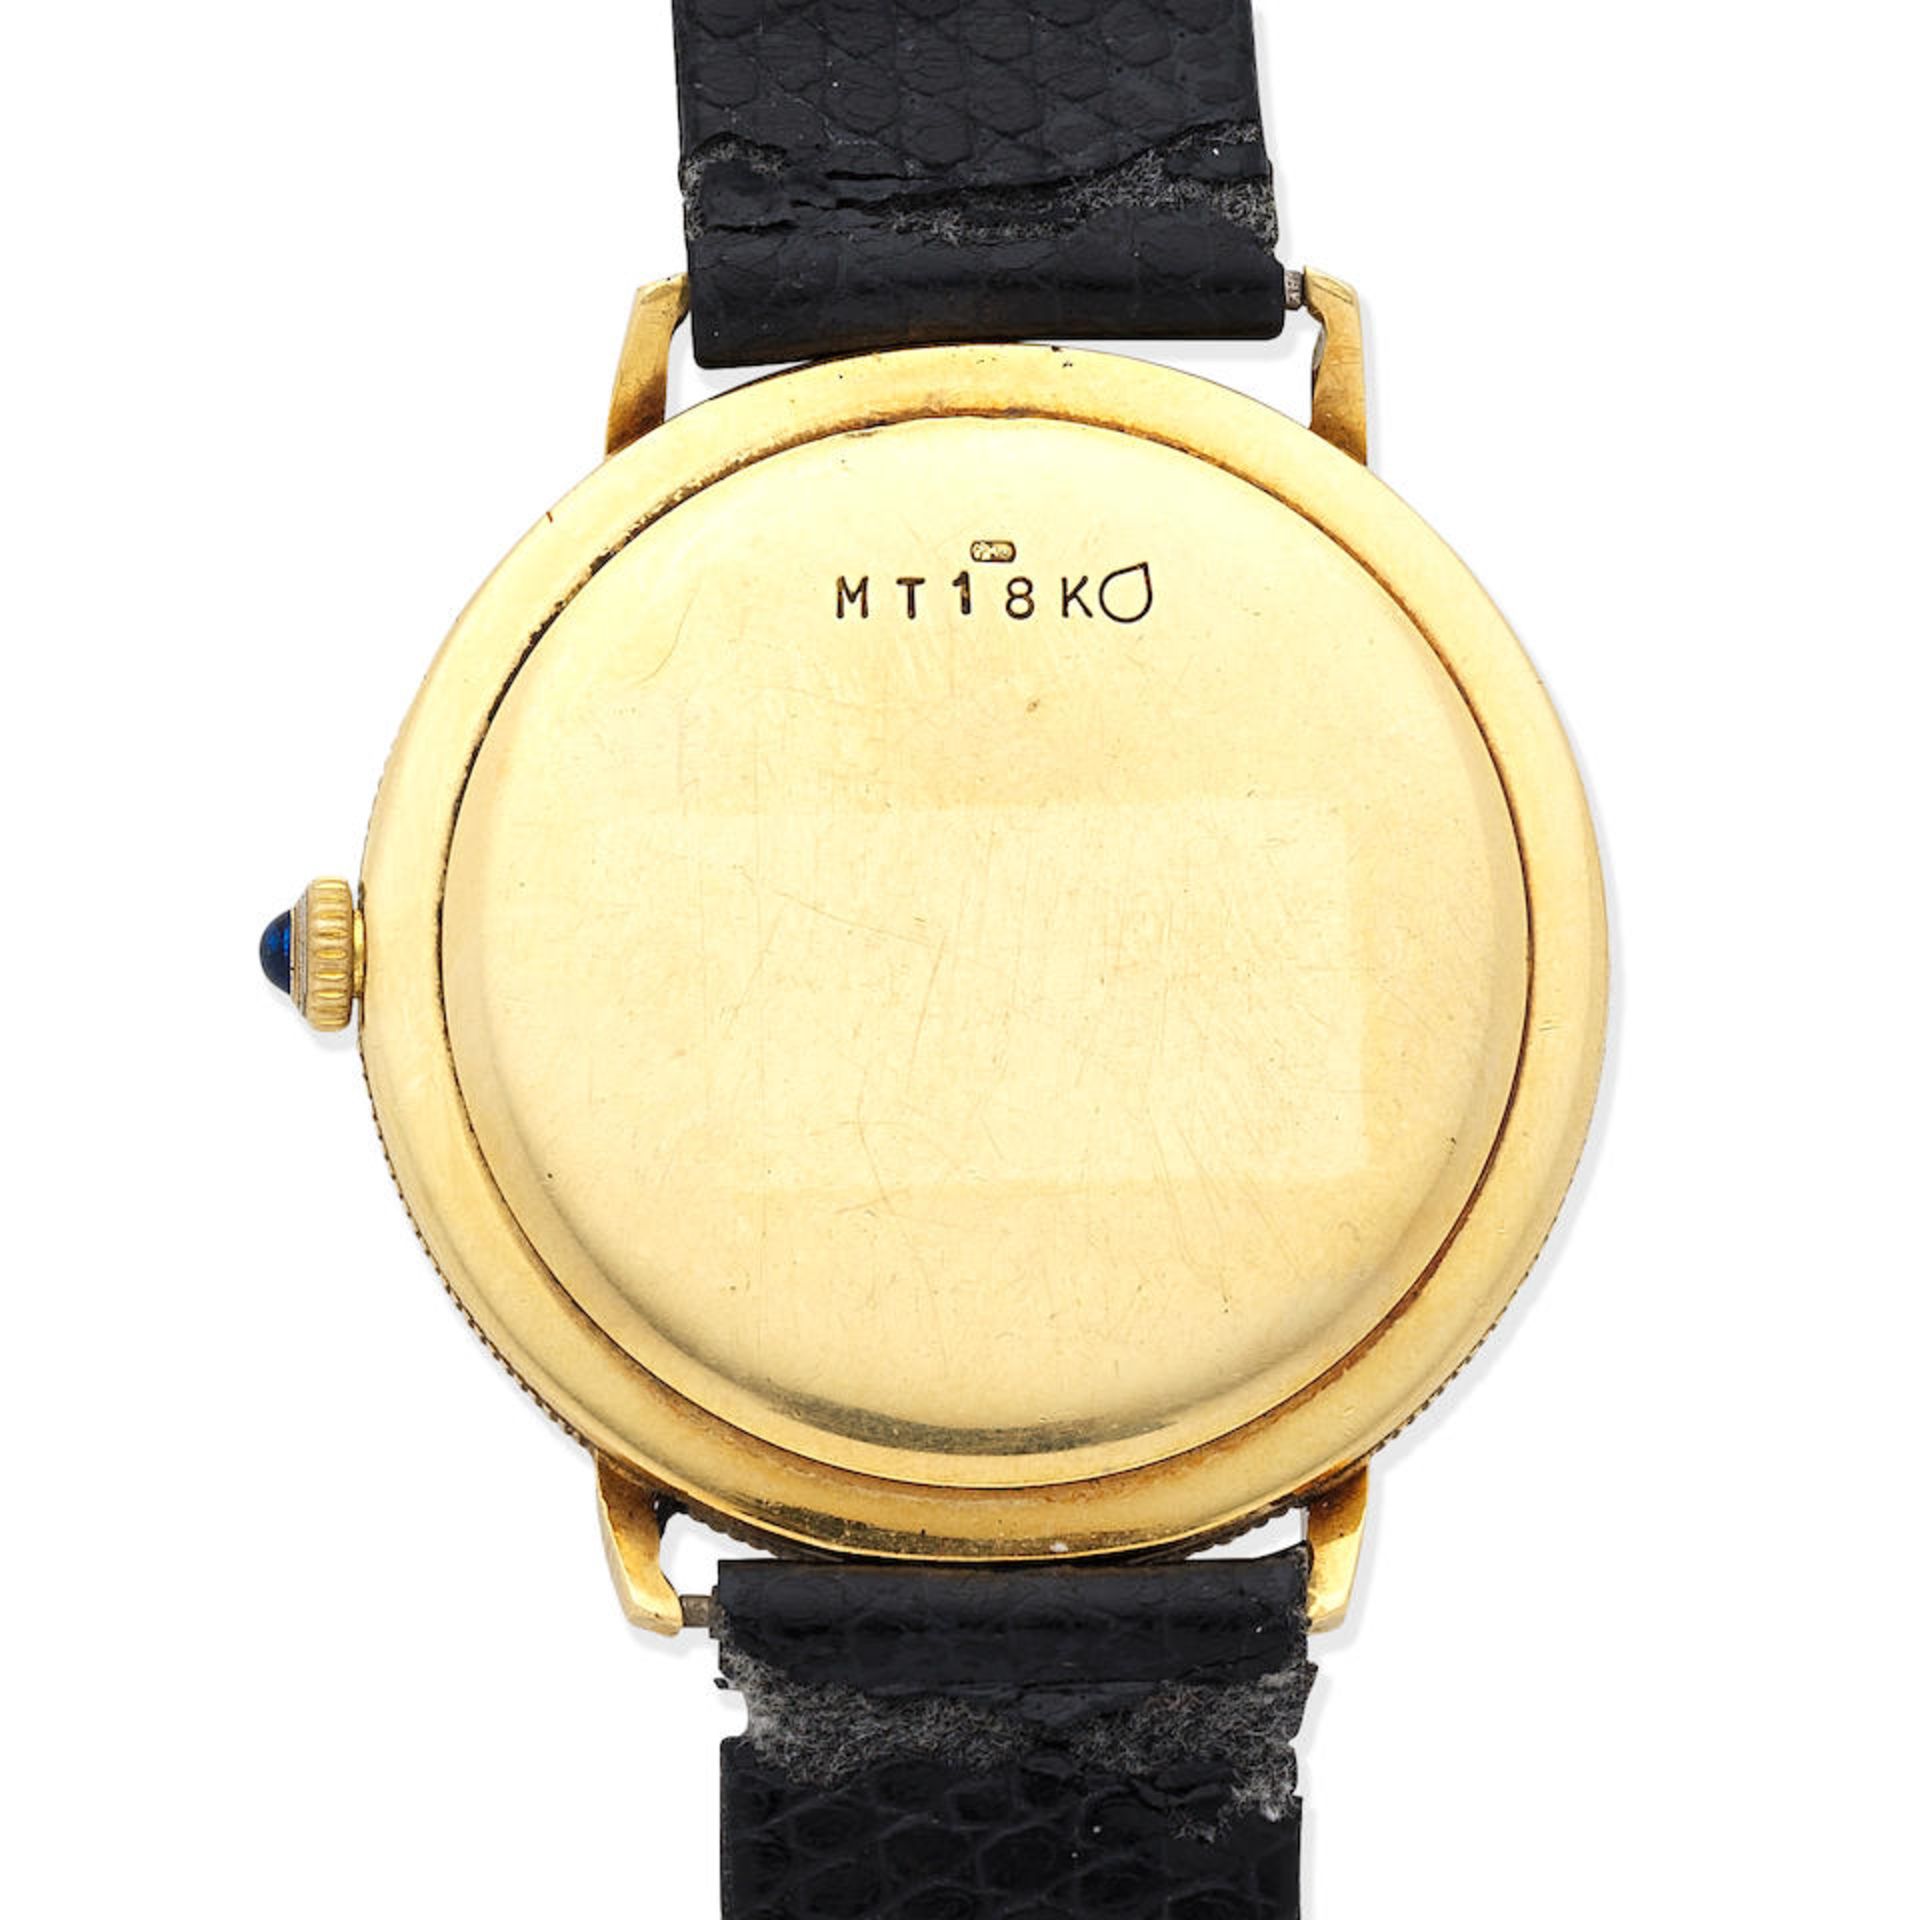 Mathey-Tissot. An 18K gold manual wind Liberty Coin wristwatch Circa 1970 - Image 2 of 5